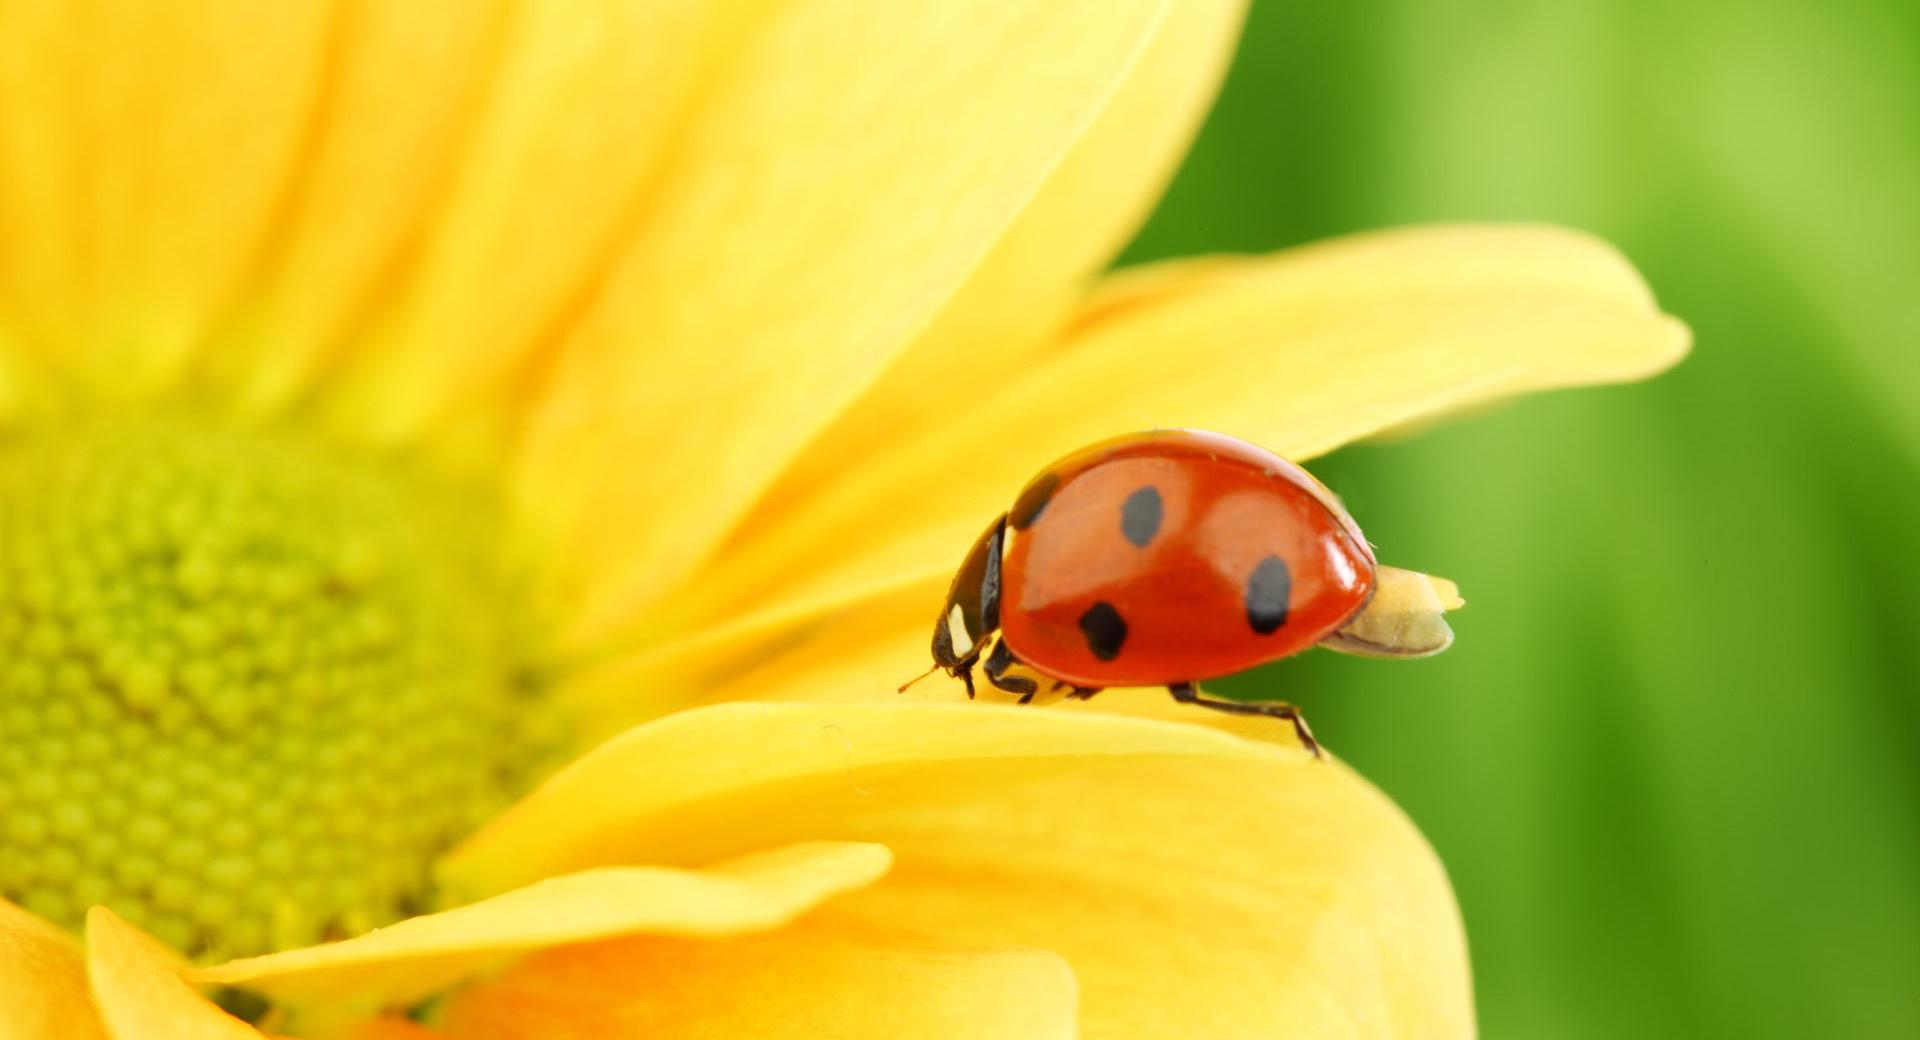 Ladybug On Yellow Flower, Macro at 1024 x 1024 iPad size wallpapers HD quality